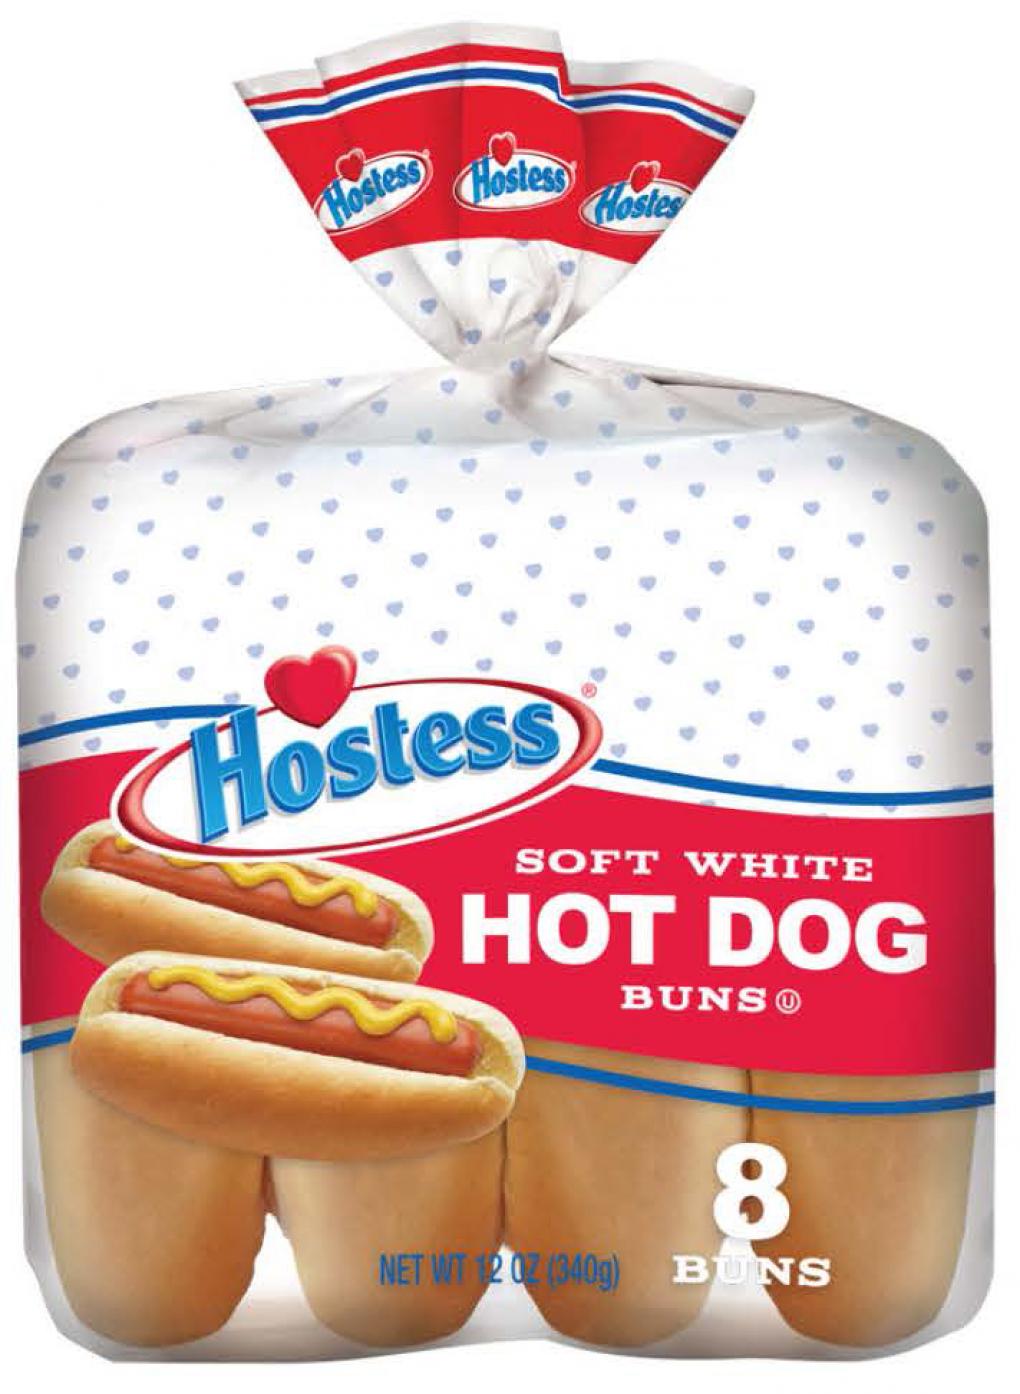 Hostess recalls hamburger, hot dog buns sold nationwide amid listeria, salmonella … – FOX23 News